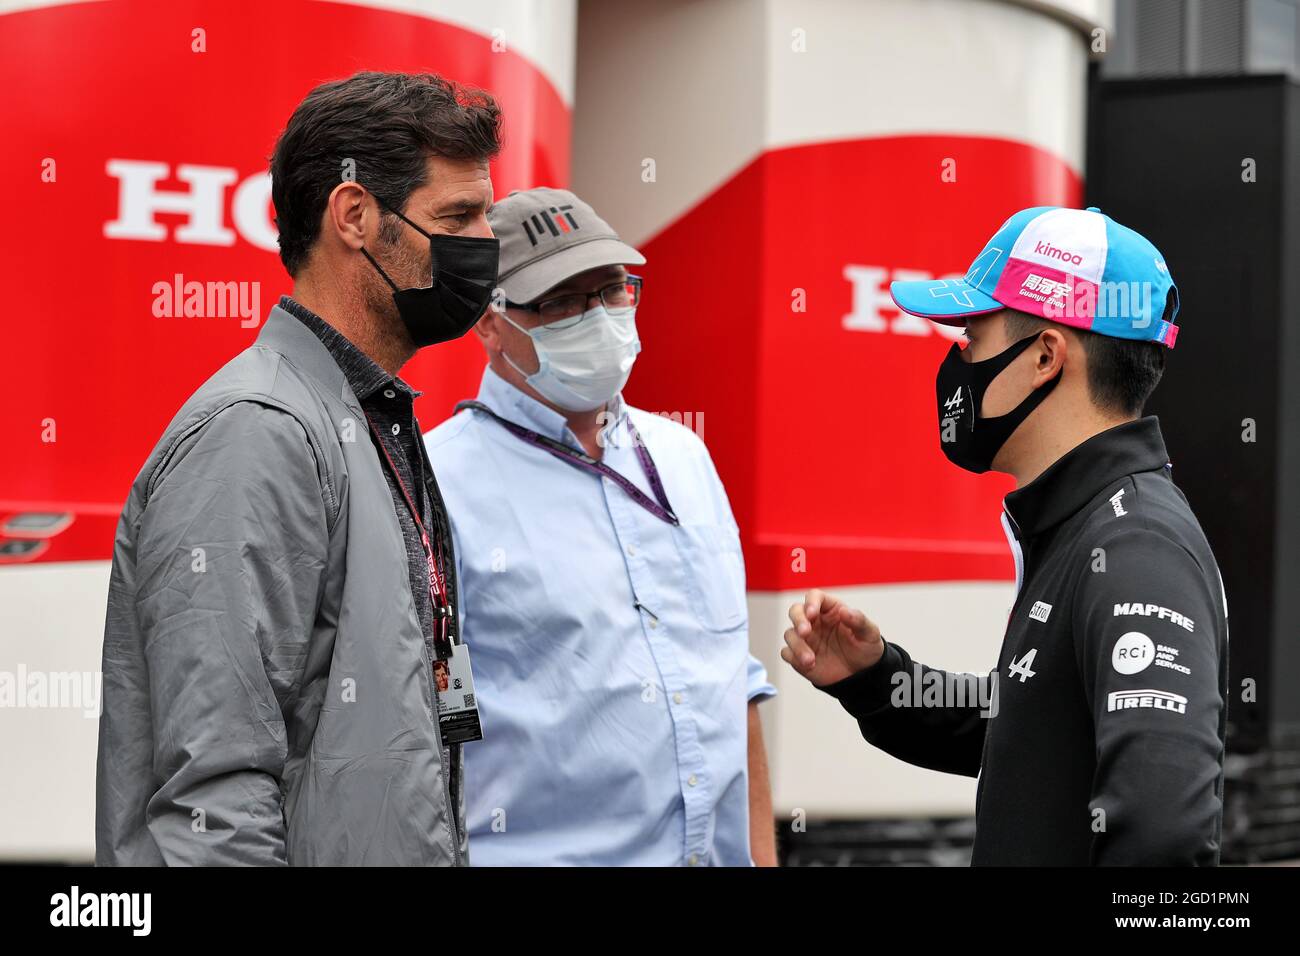 (L to R): Mark Webber (AUS) Channel 4 Presenter; Joe Saward (GBR) Journalist; and Guanyu Zhou (CHN) Alpine F1 Team Test Driver. Austrian Grand Prix, Friday 2nd July 2021. Spielberg, Austria. Stock Photo